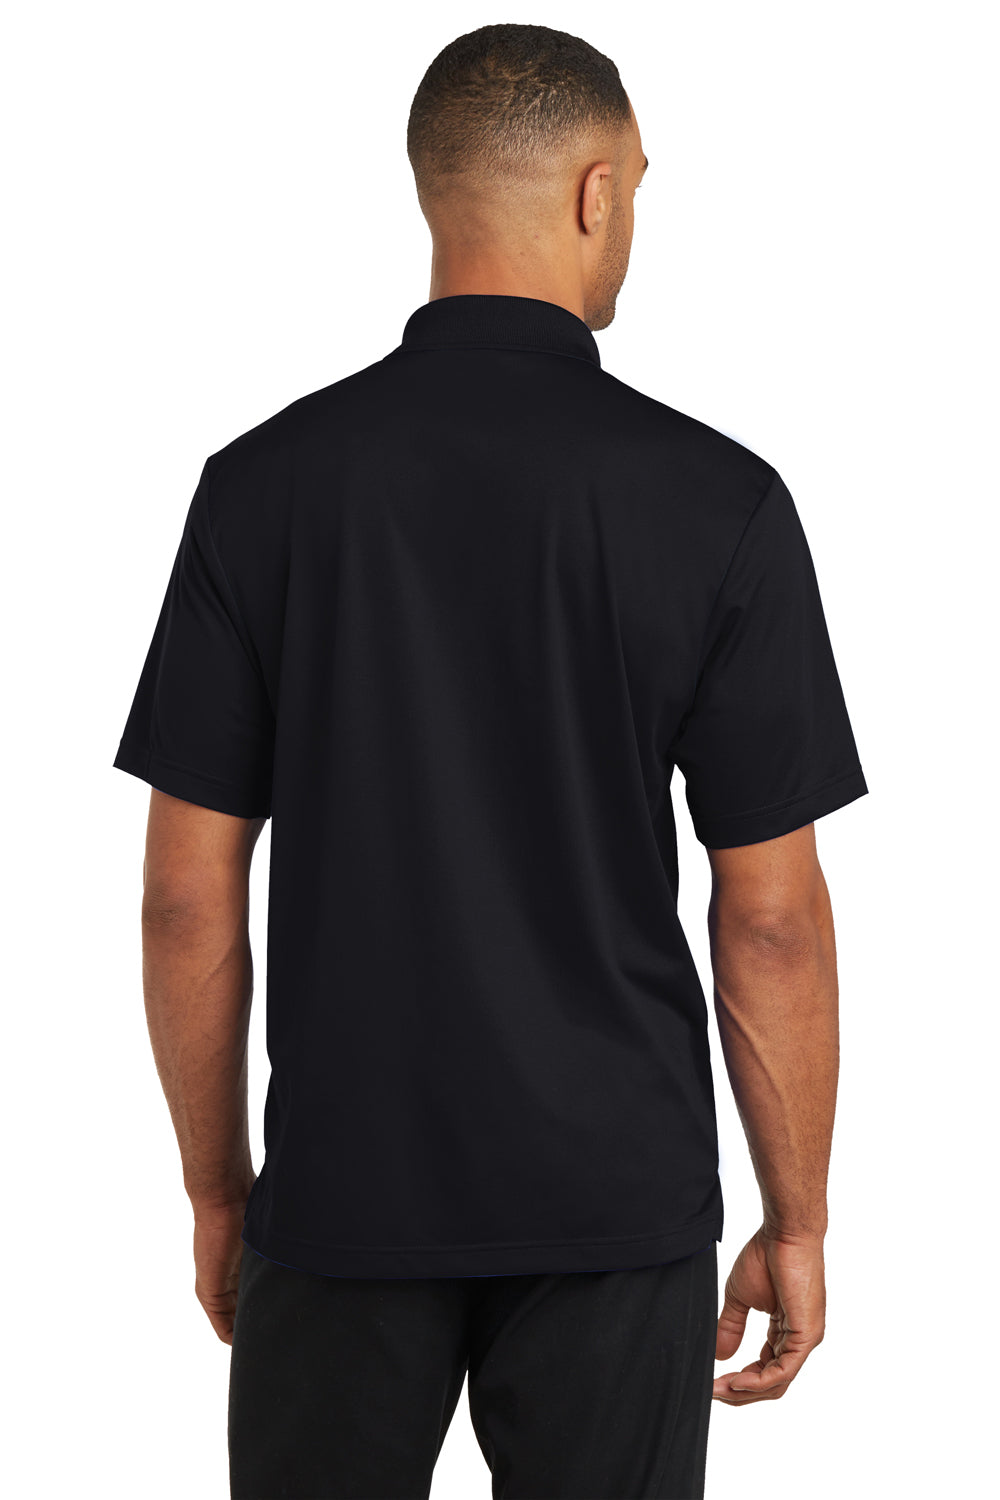 CornerStone CS421 Mens Gripper Moisture Wicking Short Sleeve Polo Shirt Black Back